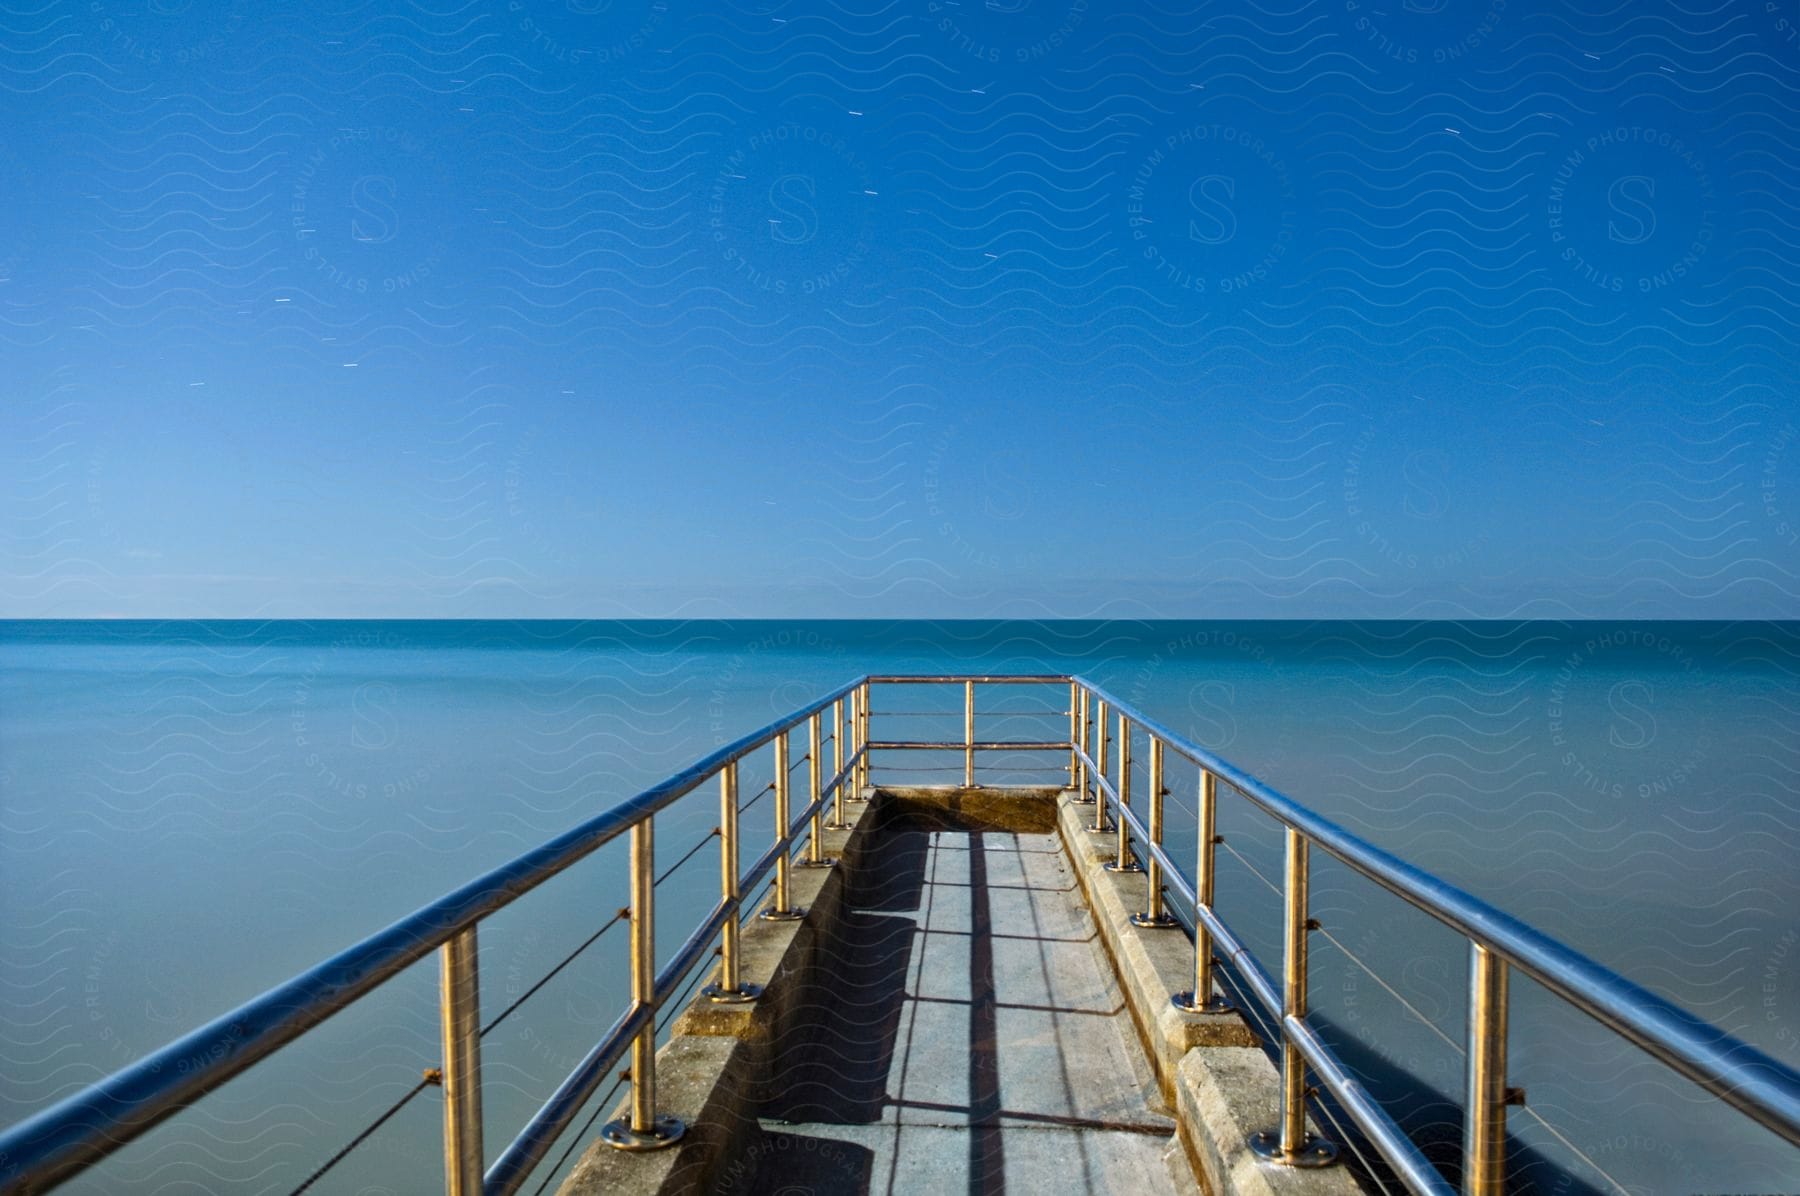 A sunlit pier with a metal railing under a blue sky